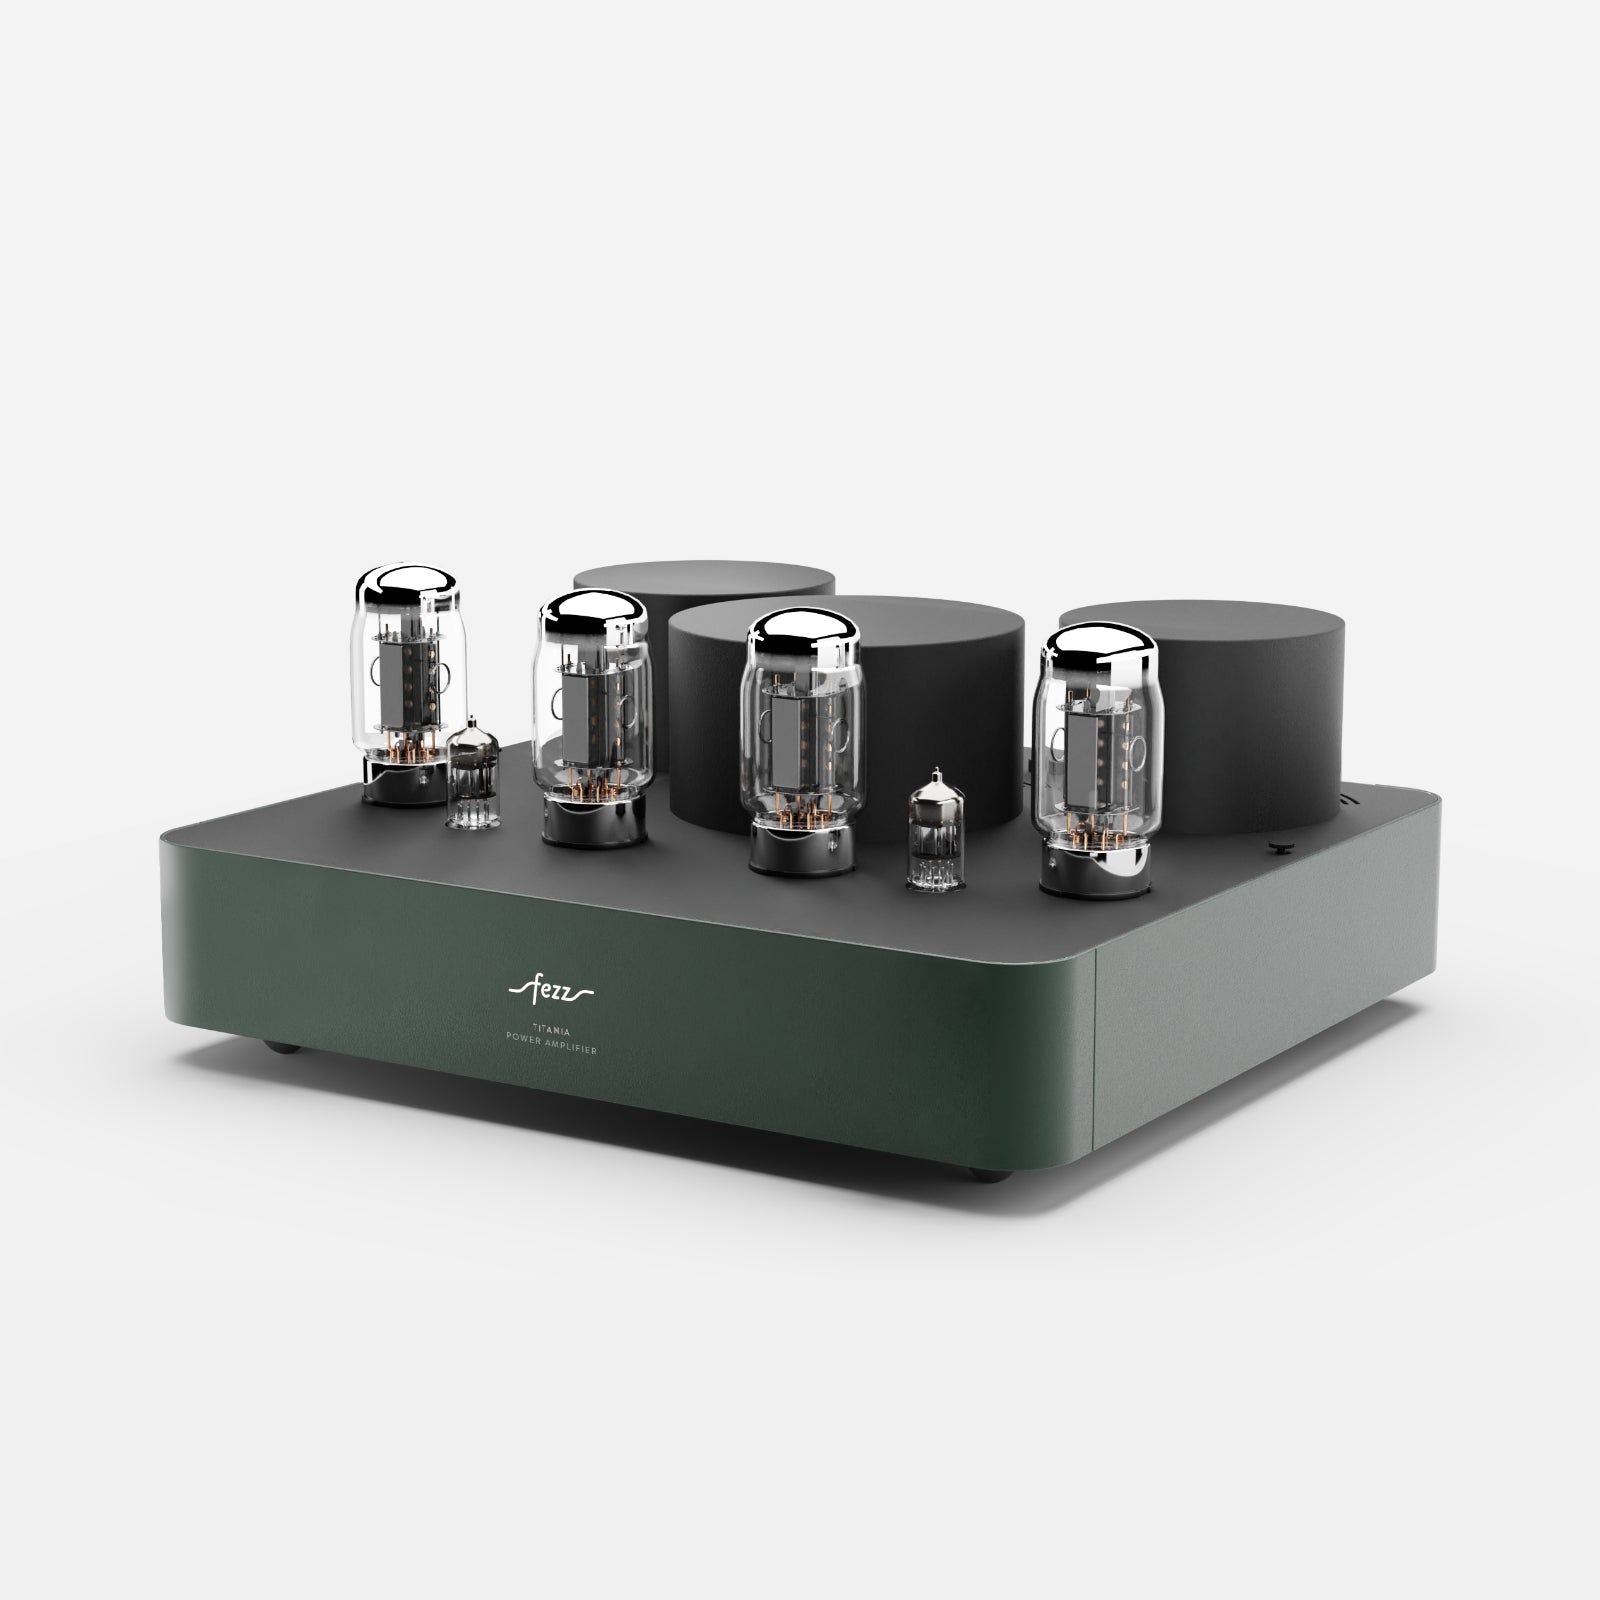 Fezz Titania Power Amplifier Evolution - Evergreen